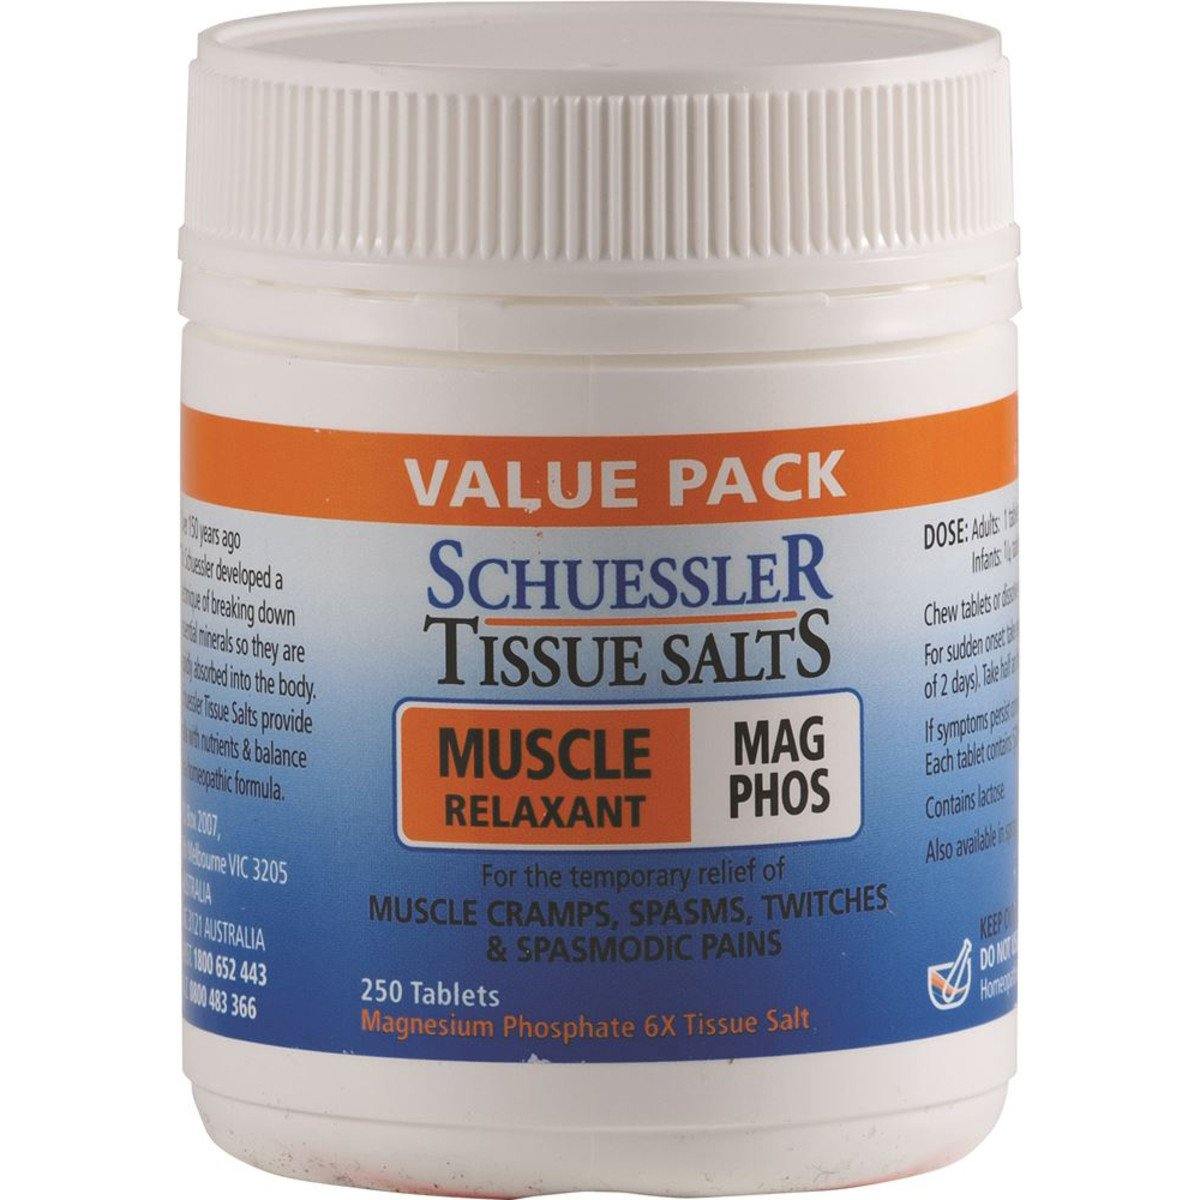 Martin & Pleasance Schuessler Tissue Salts Mag Phos (Muscle Relaxant) 250 Tablets - QVM Vitamins™